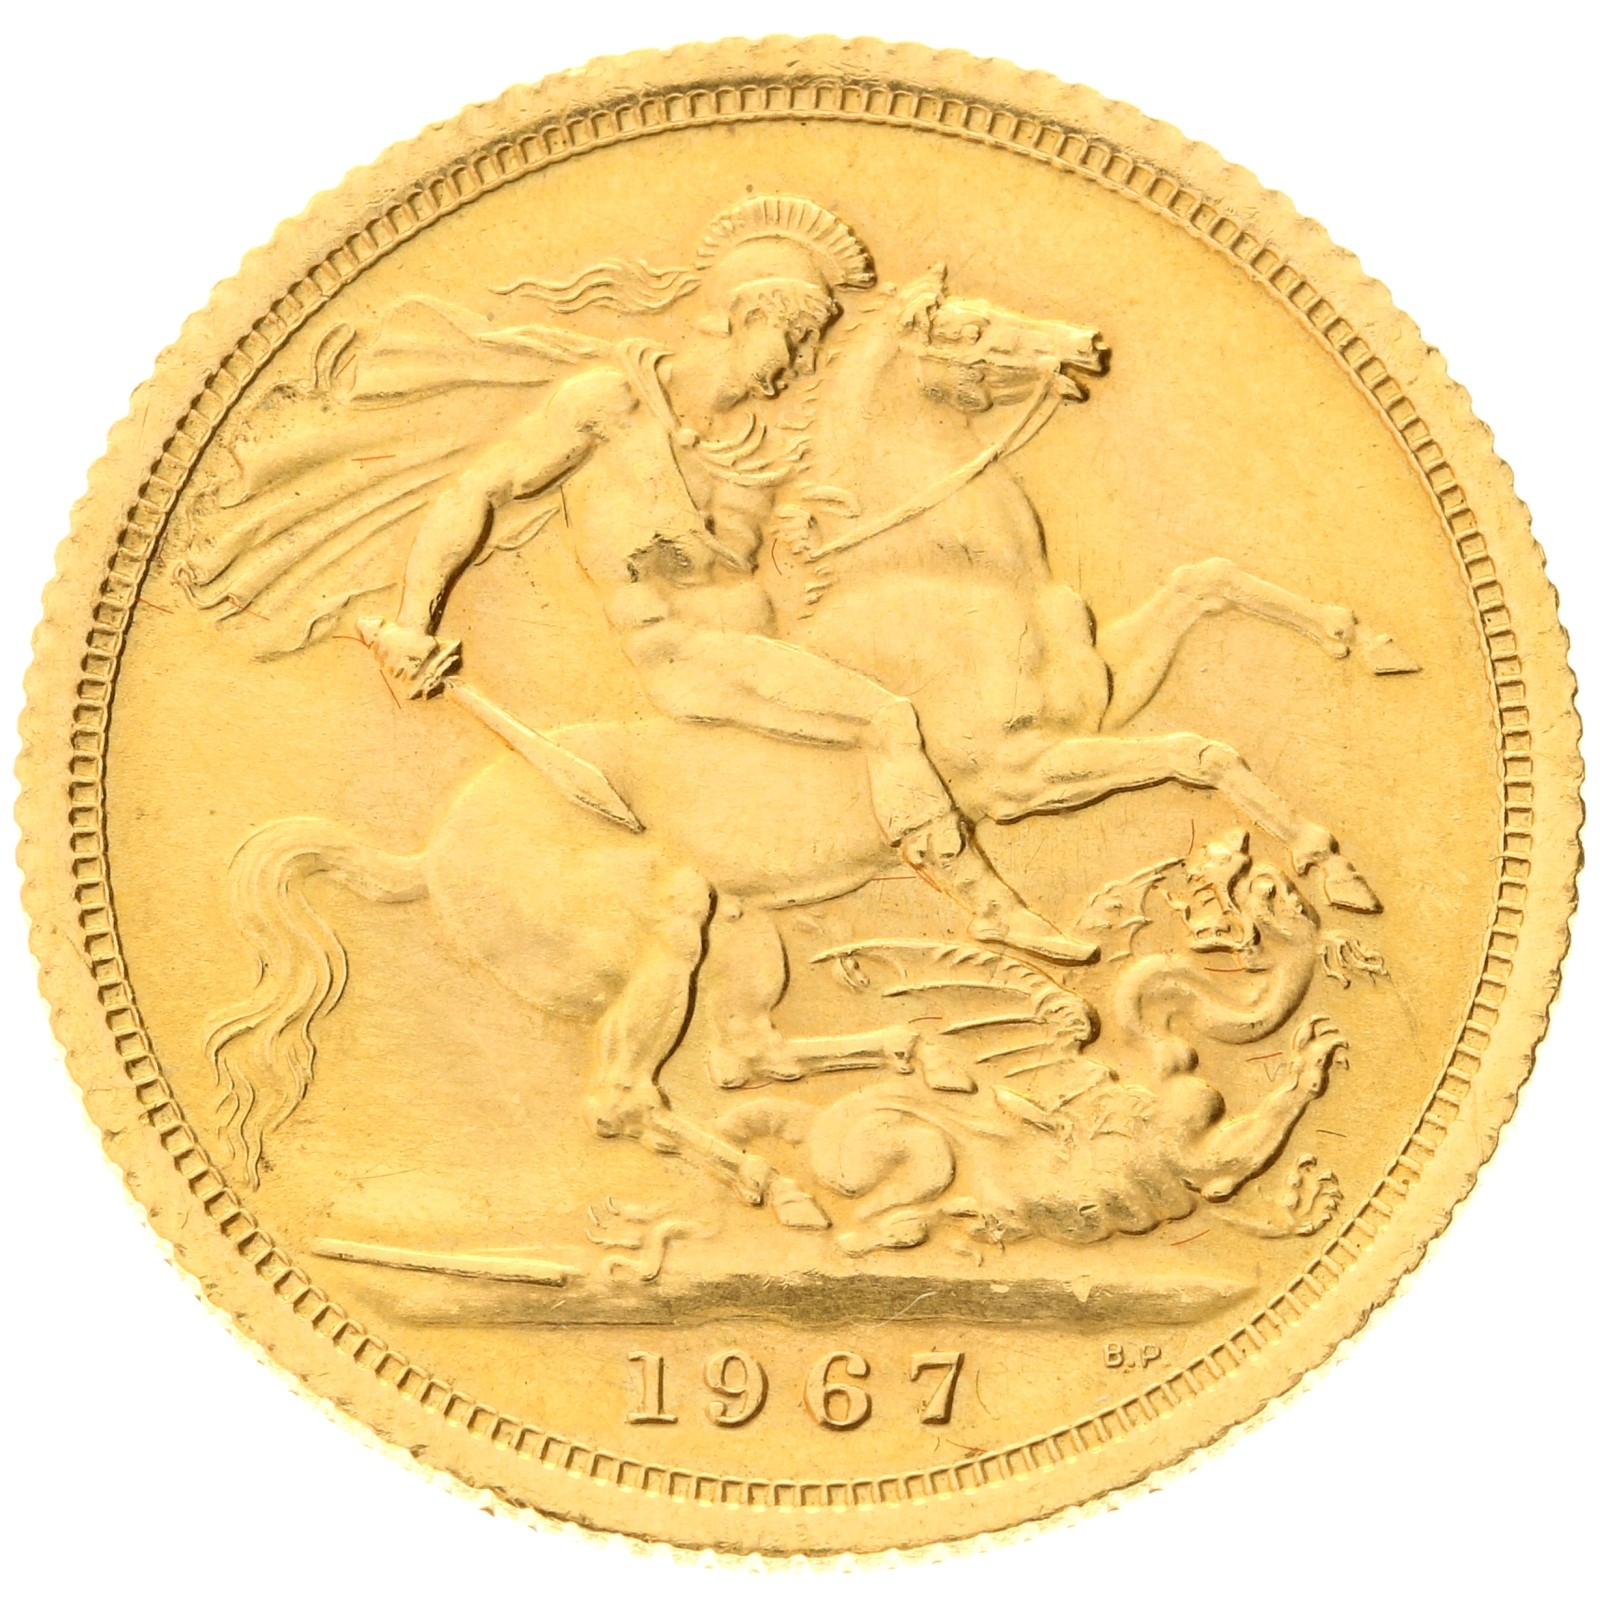 United Kingdom - 1 Sovereign - 1967 - Elizabeth II